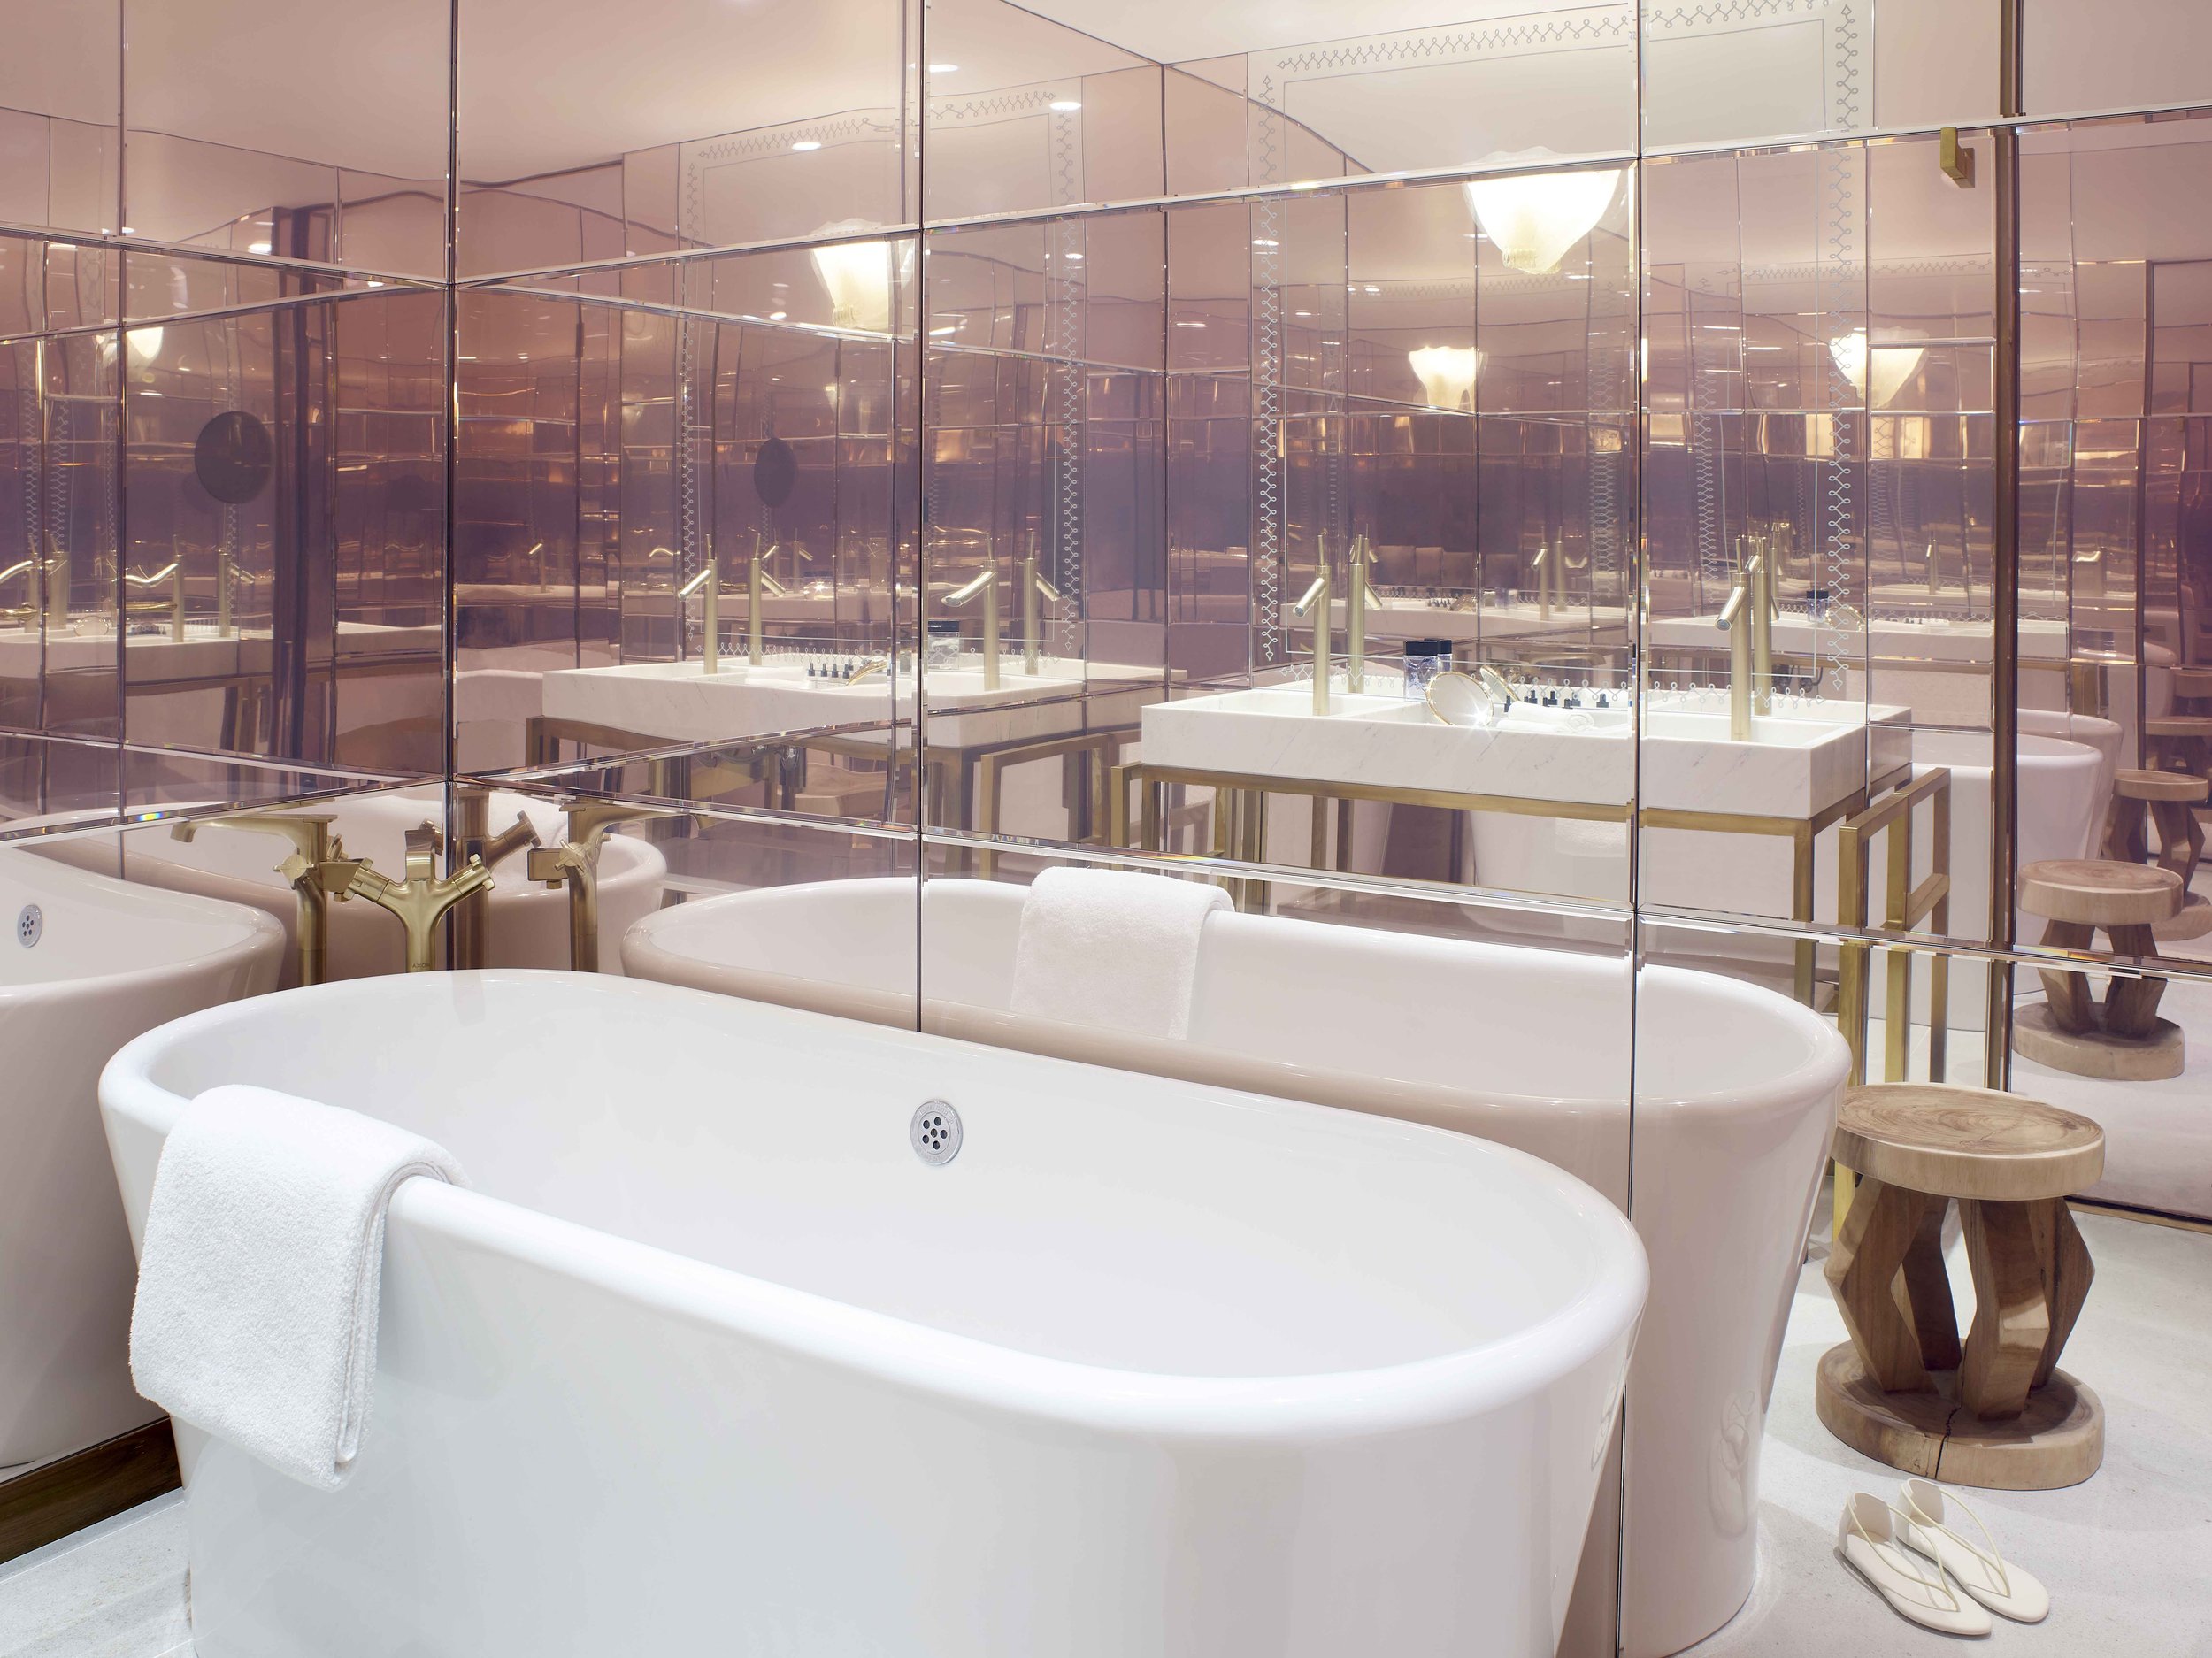 Hotel 9Confidentiel&nbsp;bath tub against mirrored wall